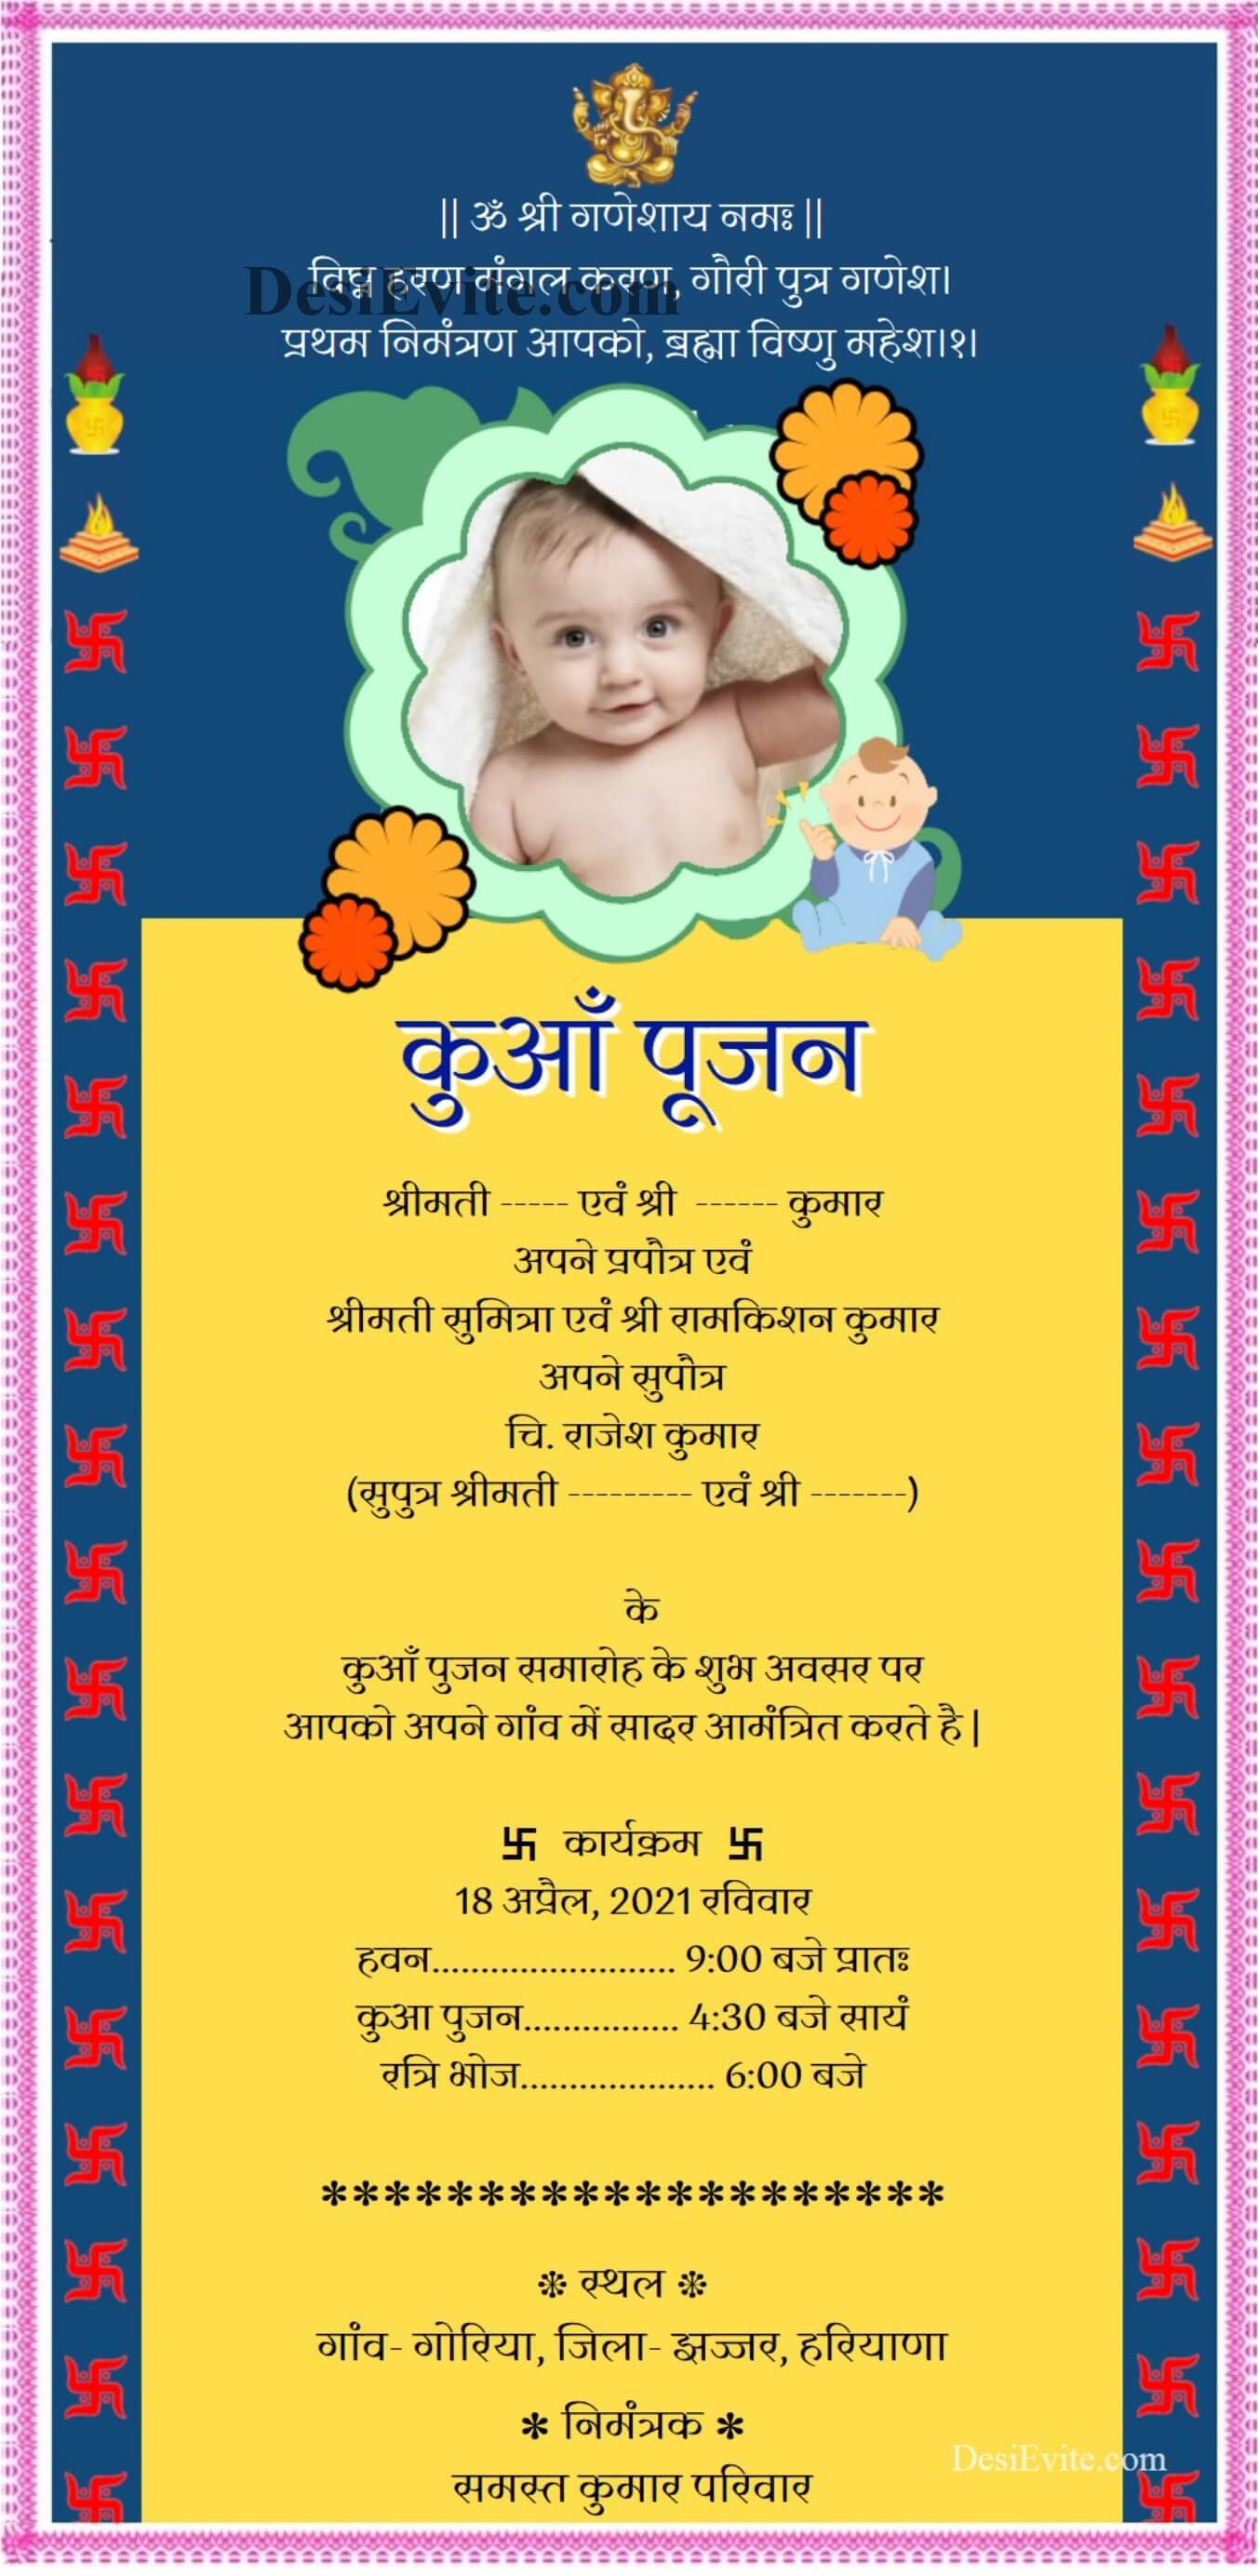 Kuan poojan invitation card in Hindi font 122 